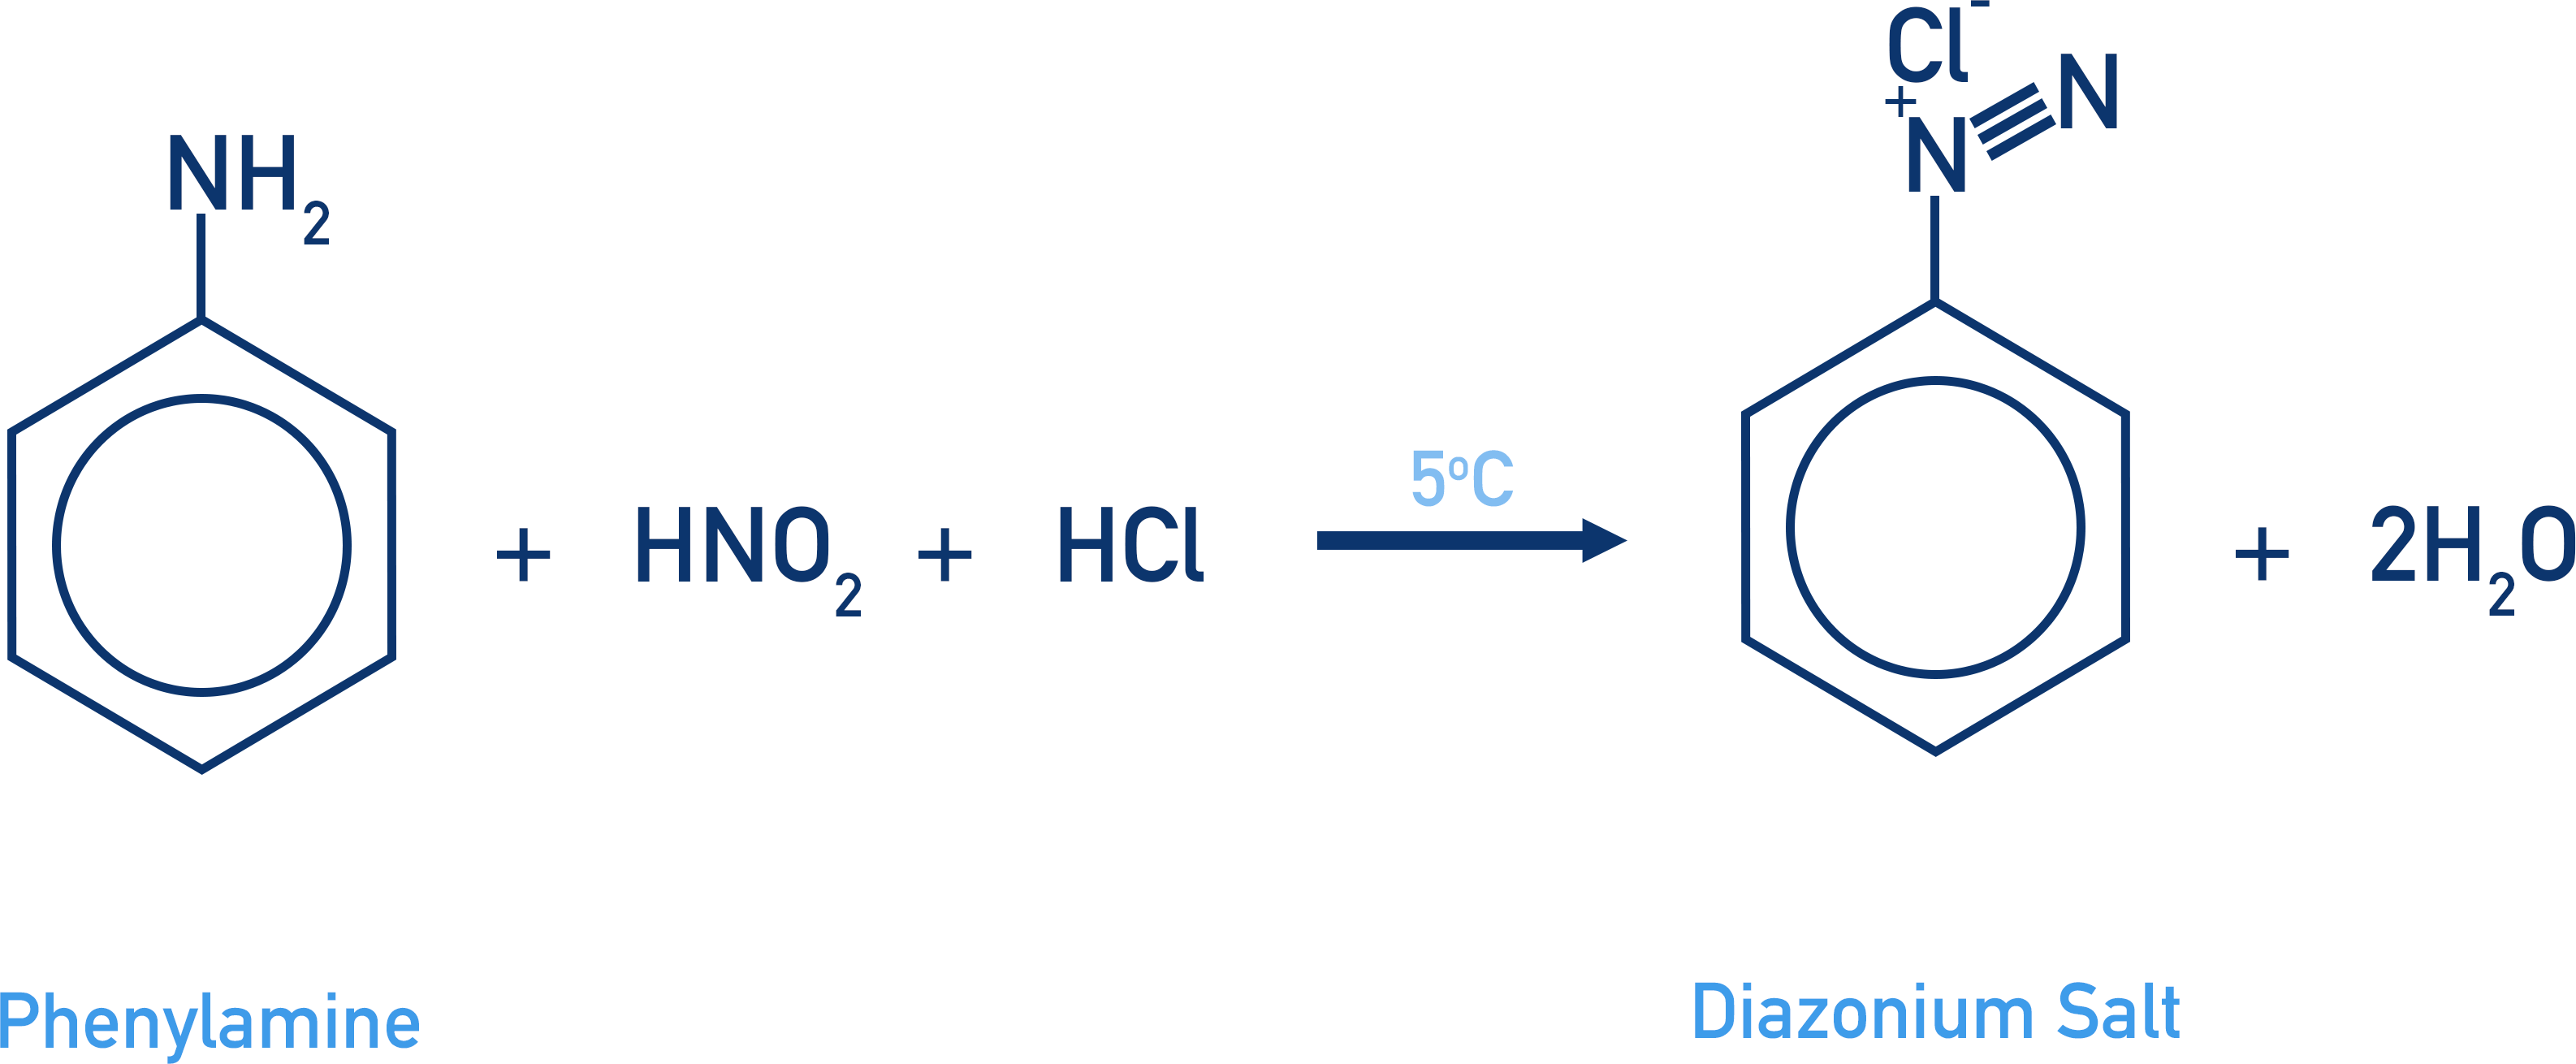 phenylamine nitrous acid hydrochloric acid diazonium salt